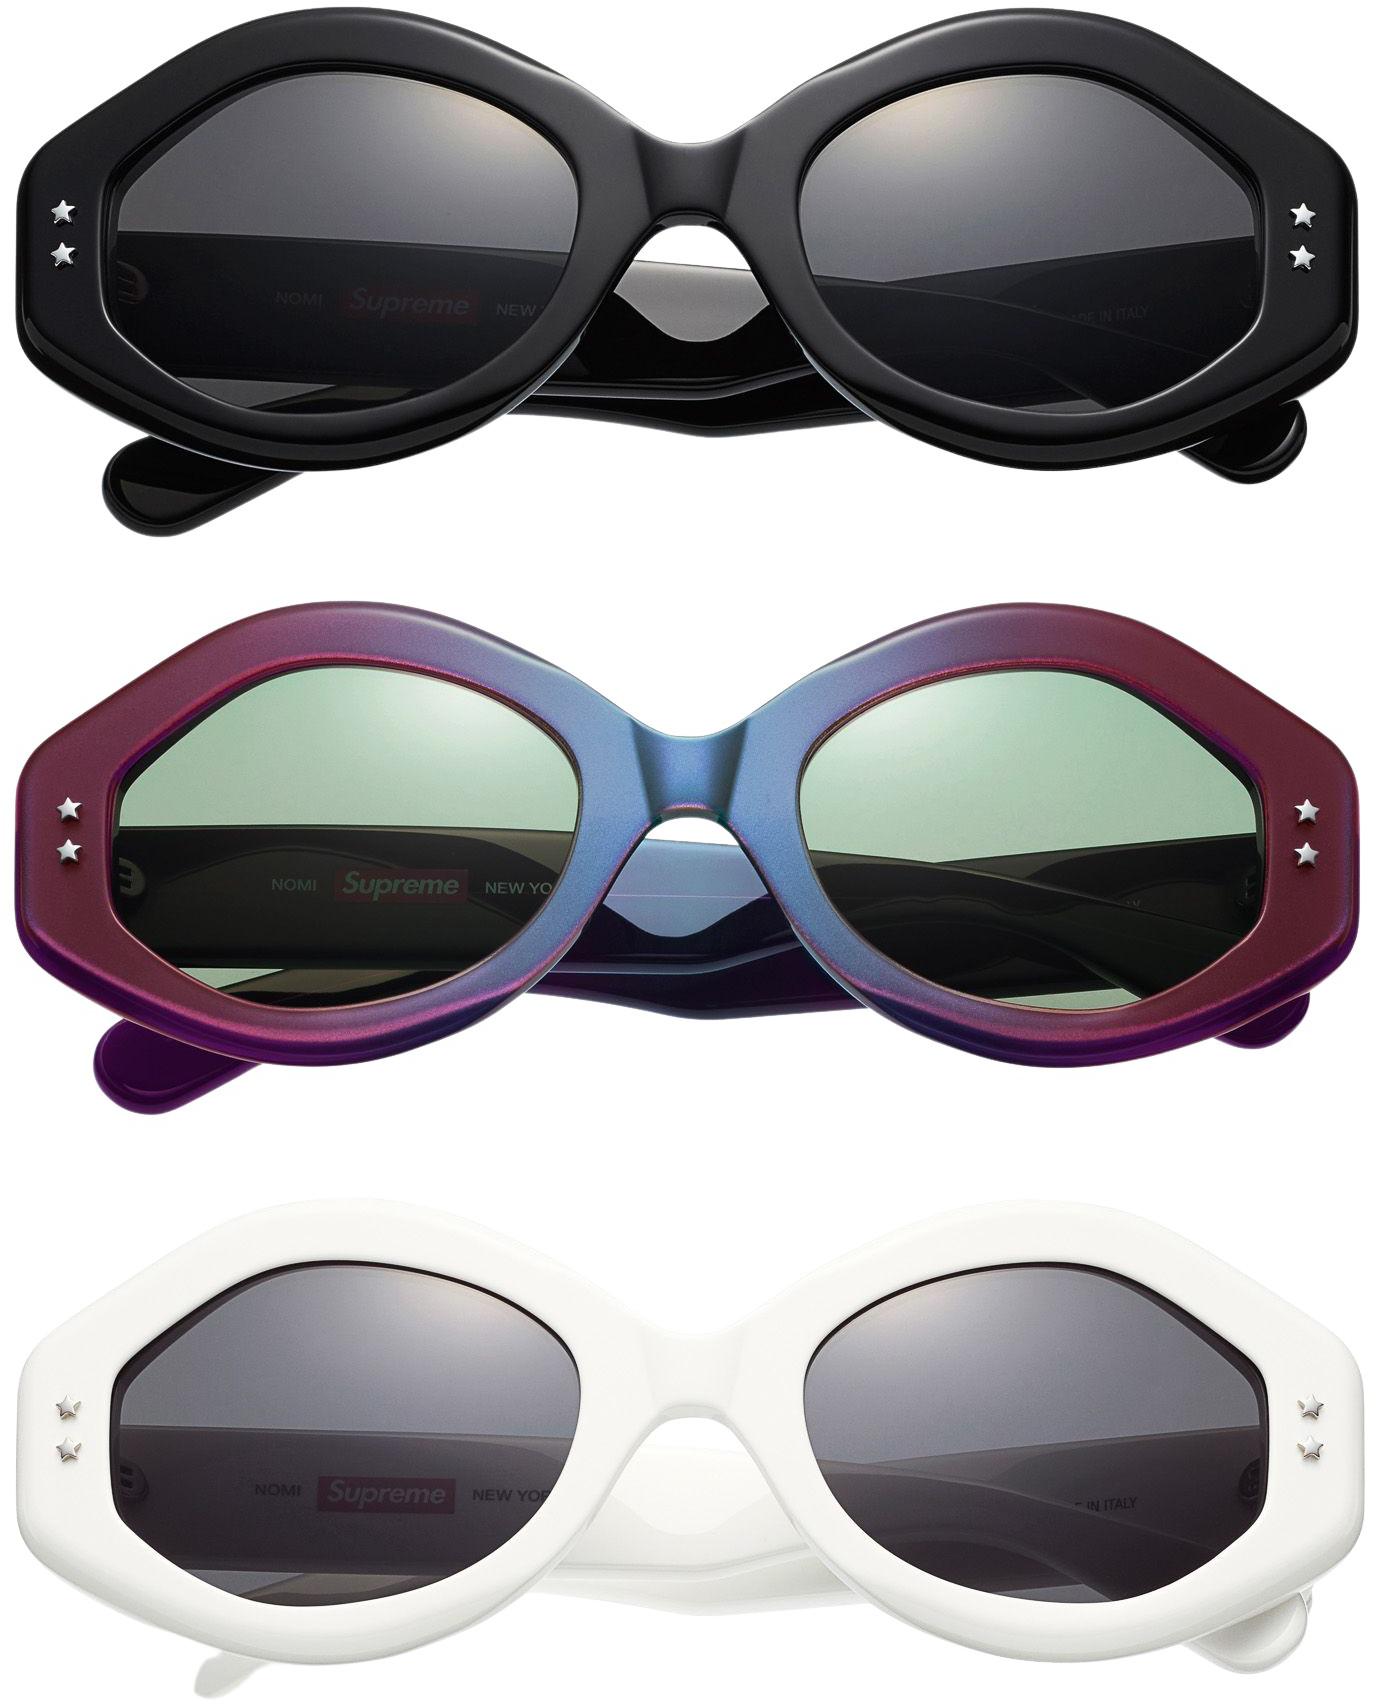 Supreme Nomi Sunglasses Purpleプチプチも含め完全未開封